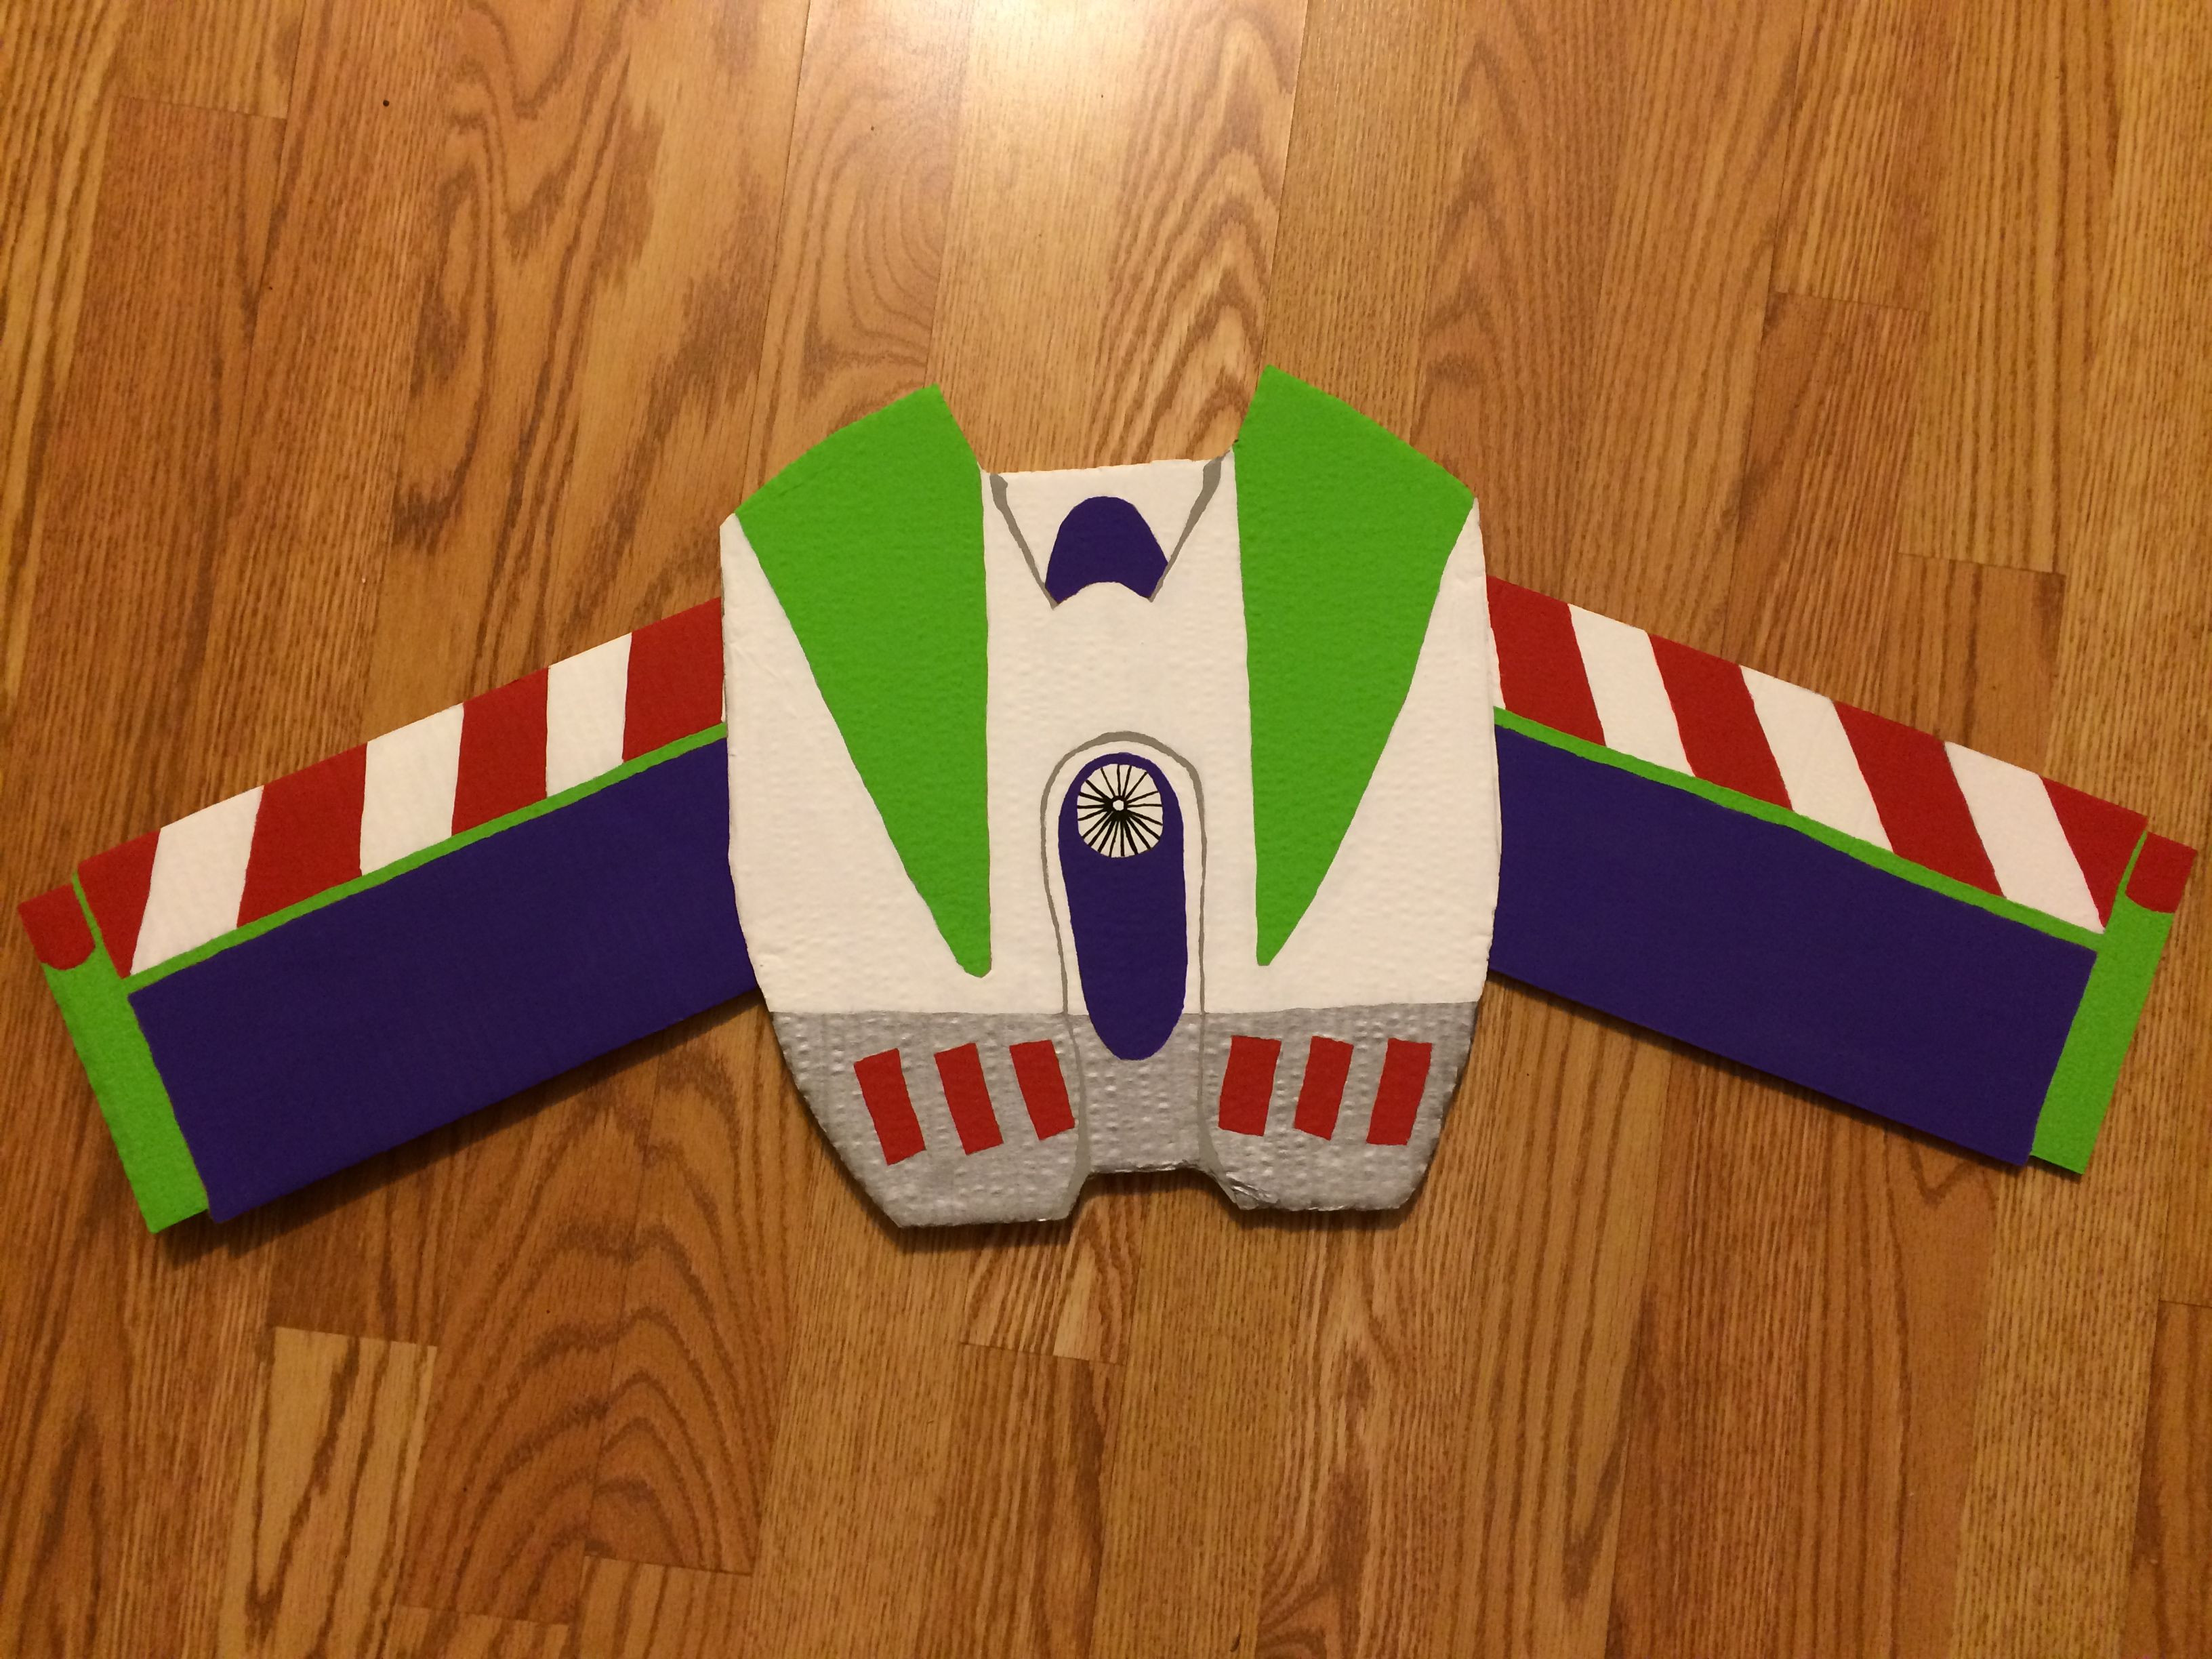 Best ideas about DIY Buzz Lightyear Wings
. Save or Pin Homemade Buzz Lightyear wings only requires cardboard Now.